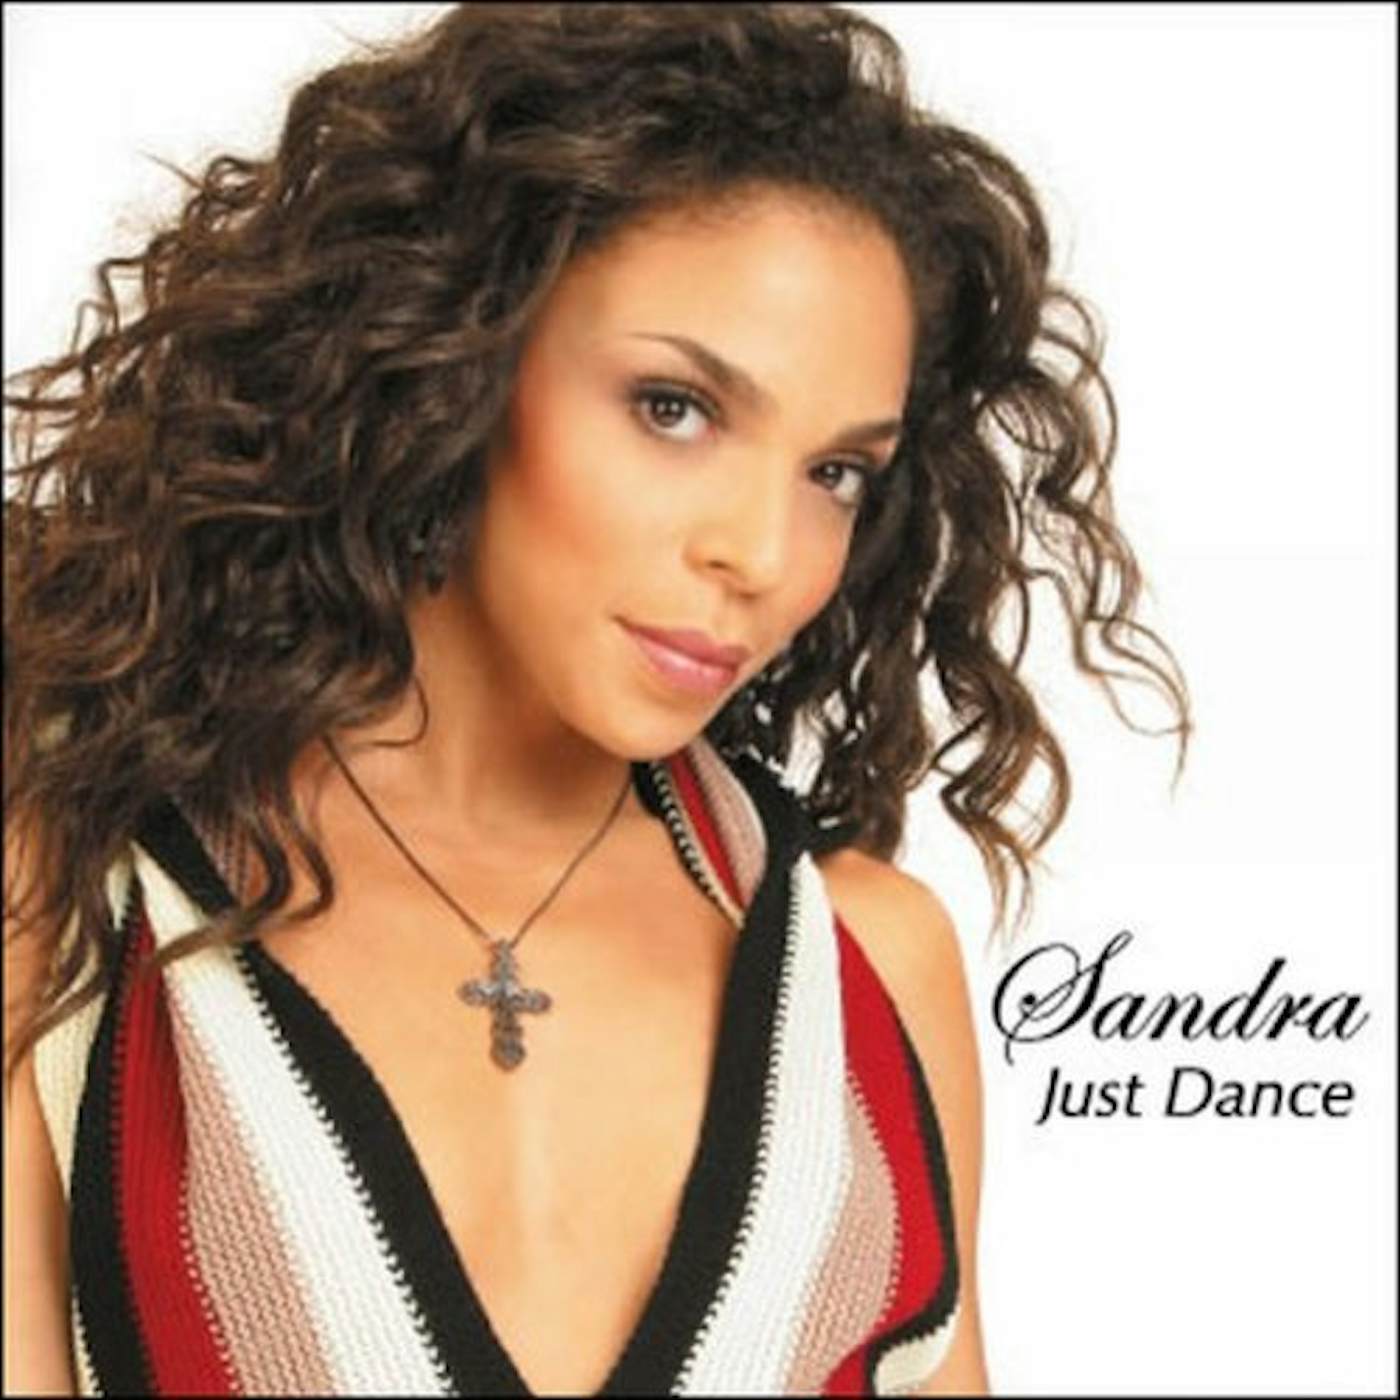 Sandra JUST DANCE CD